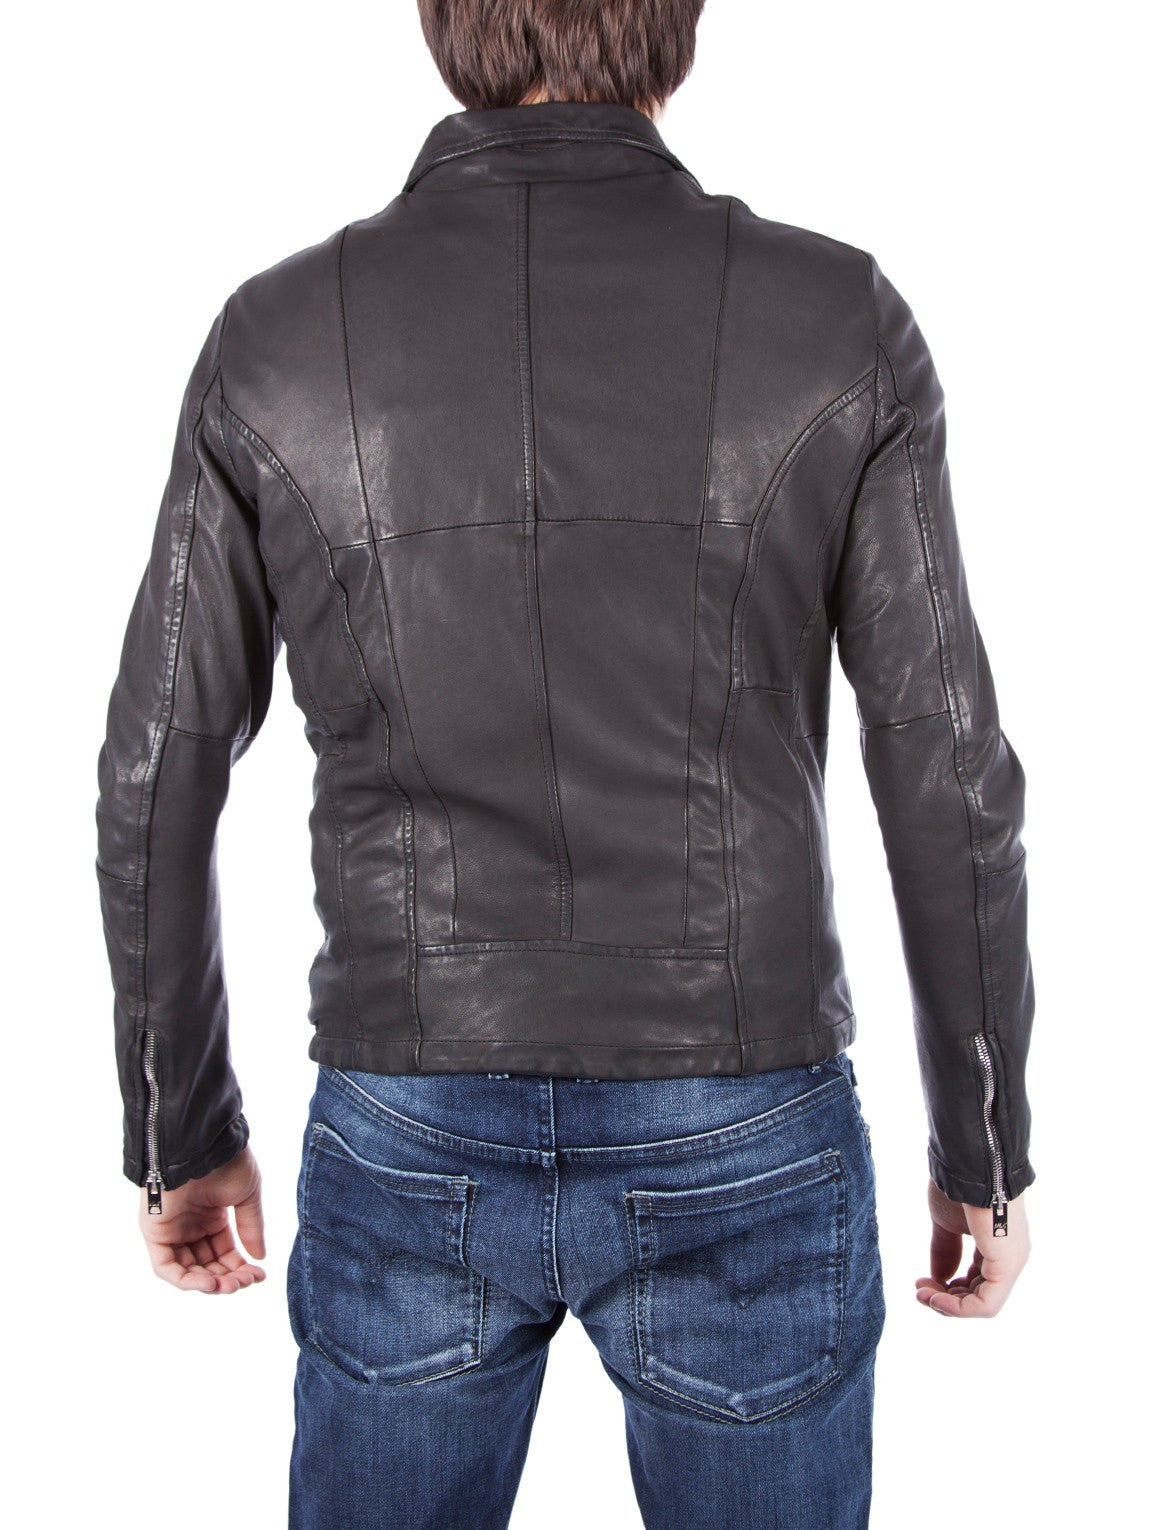 WLG by GIORGIO BRATO - Jacket simil Chiodo NERO-Jacket-Wlg by Giorgio Brato-TRYME Shop